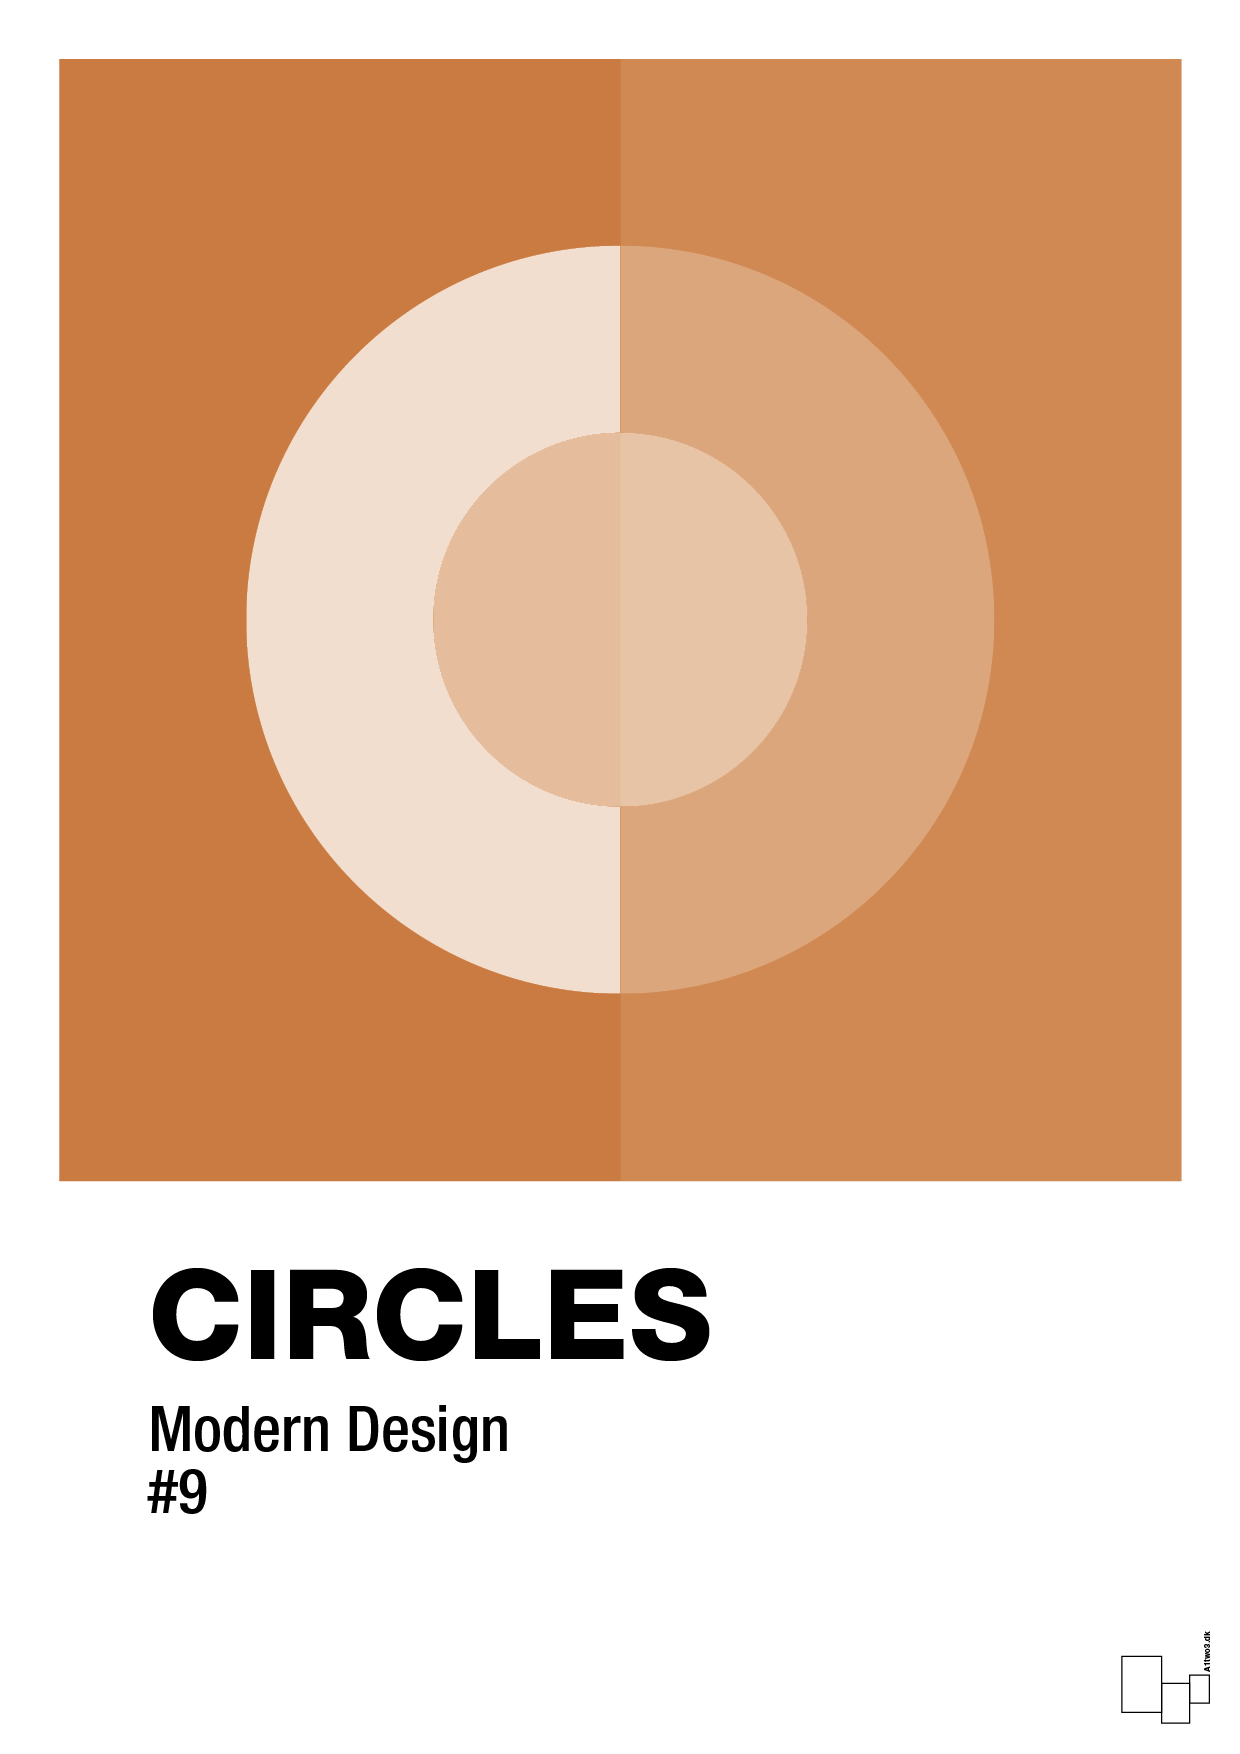 circles #9 - Plakat med Grafik i Rumba Orange